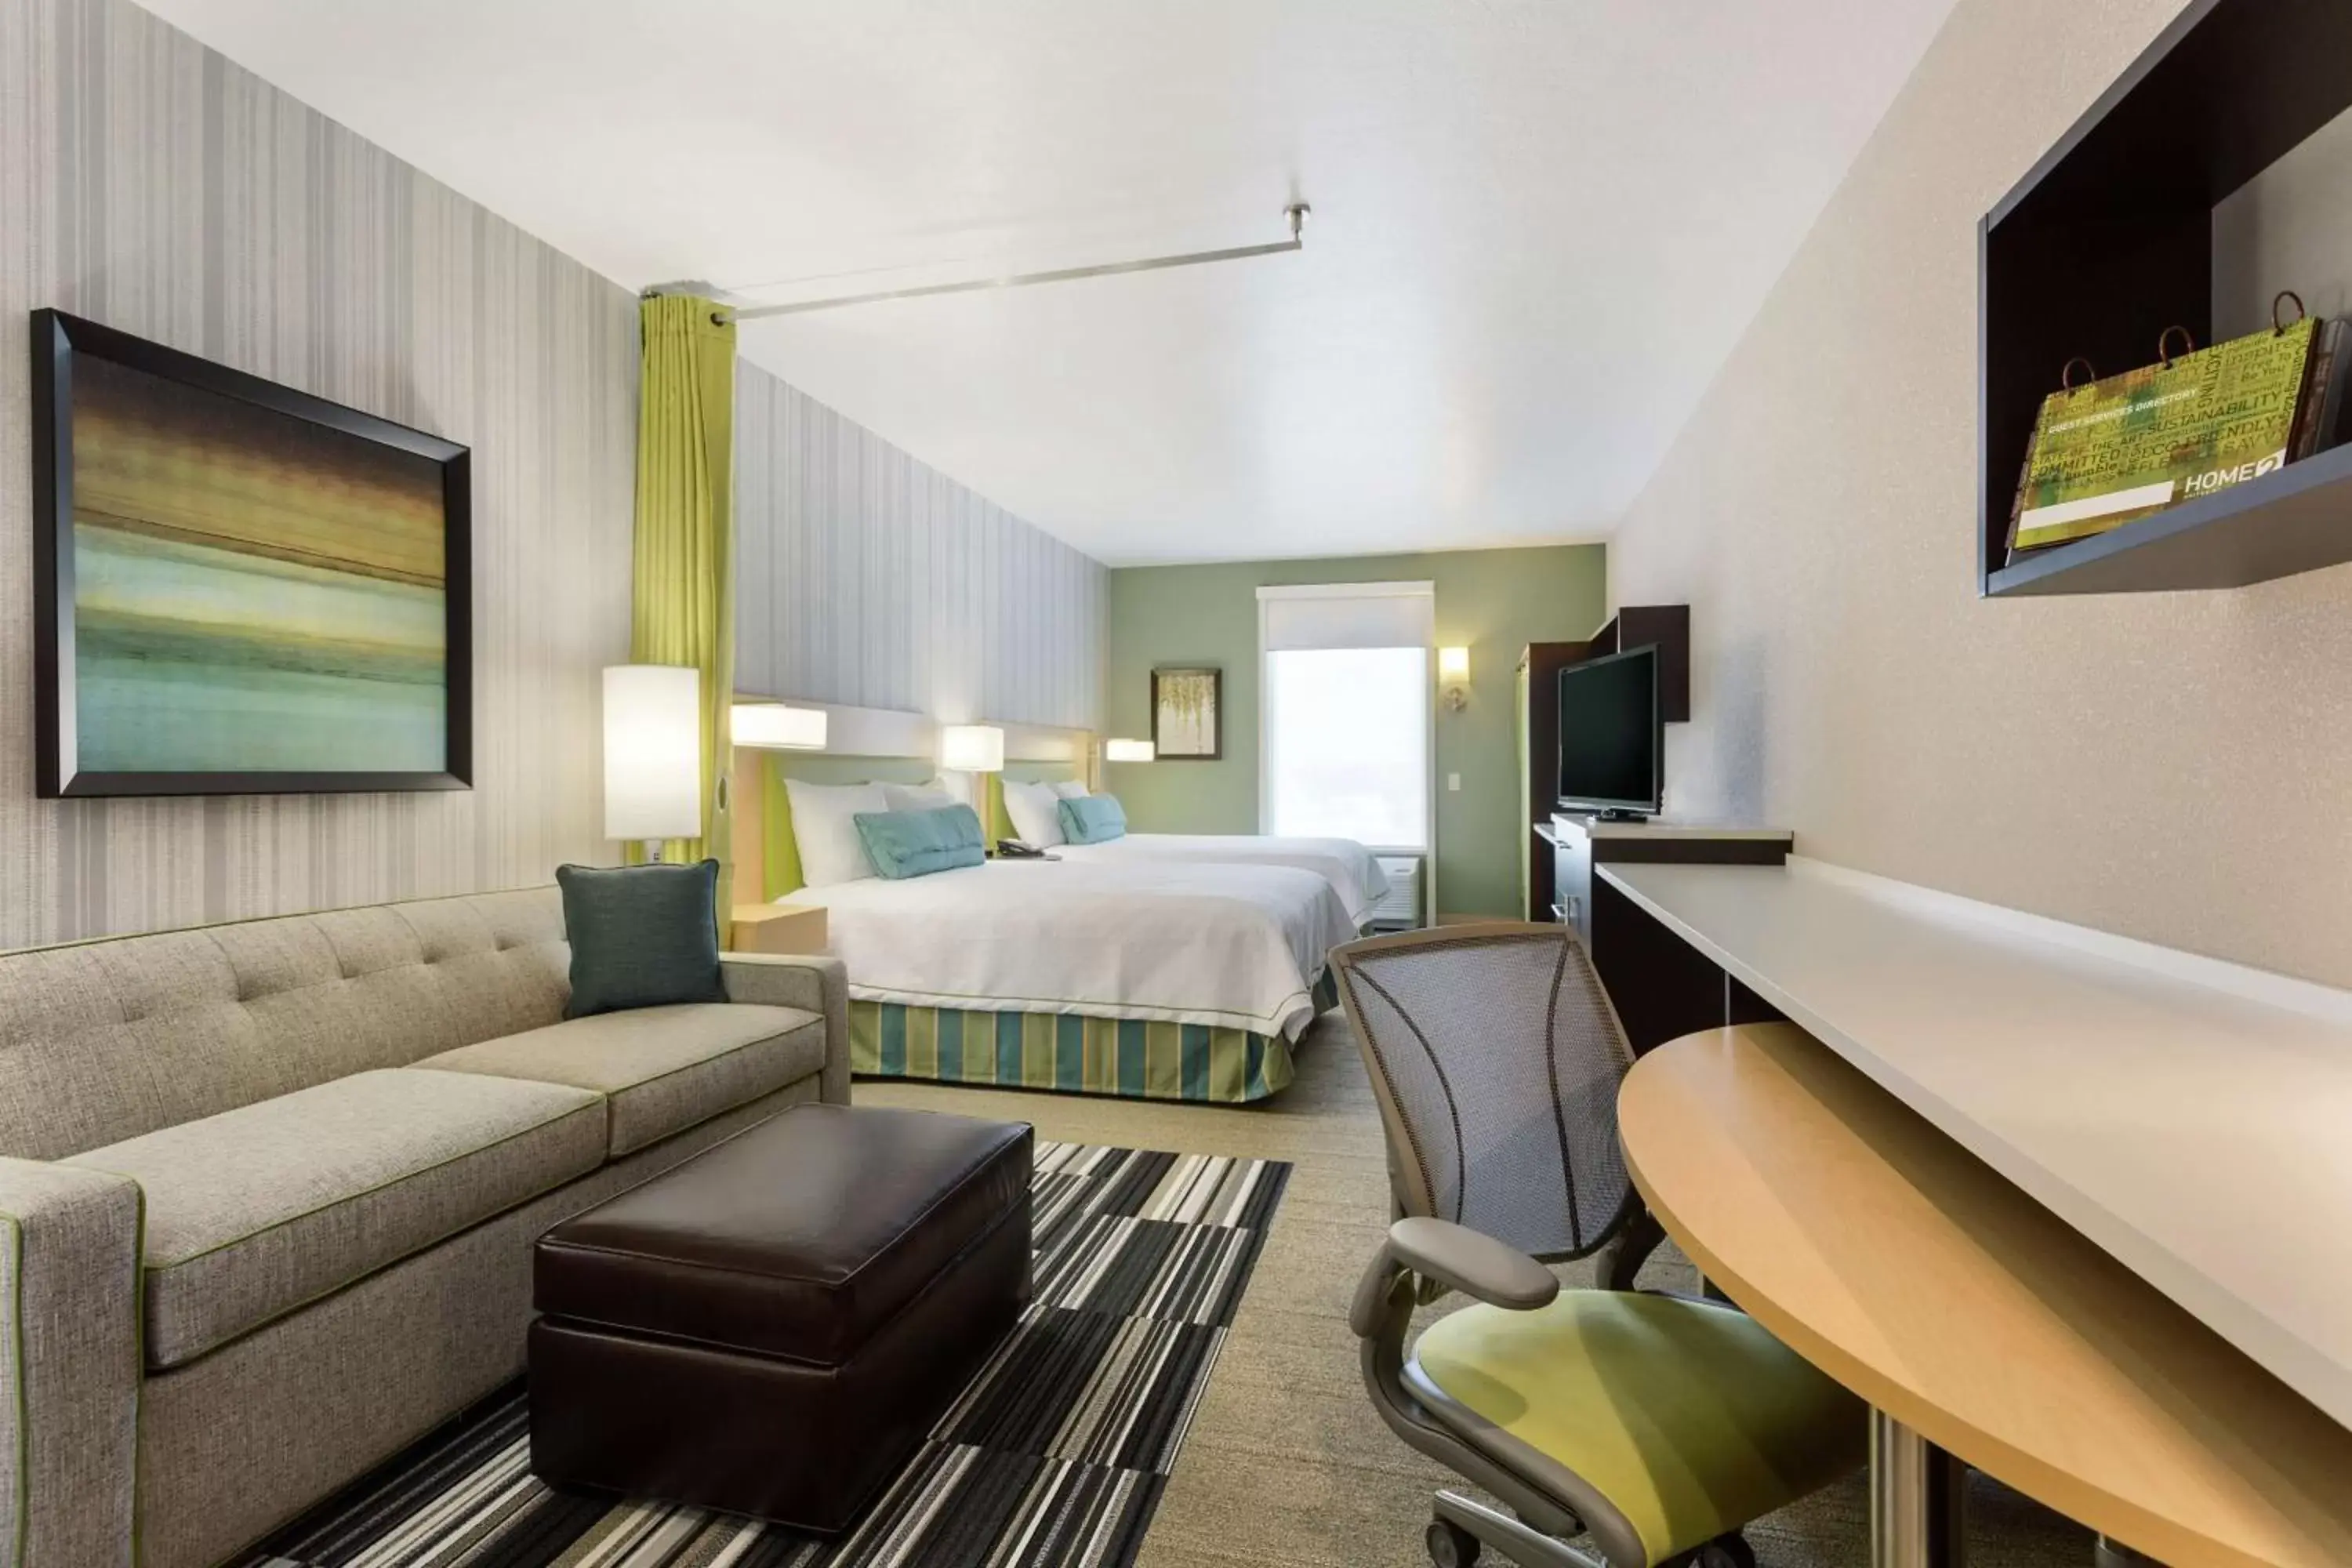 Bedroom in Home2 Suites by Hilton Salt Lake City-Murray, UT